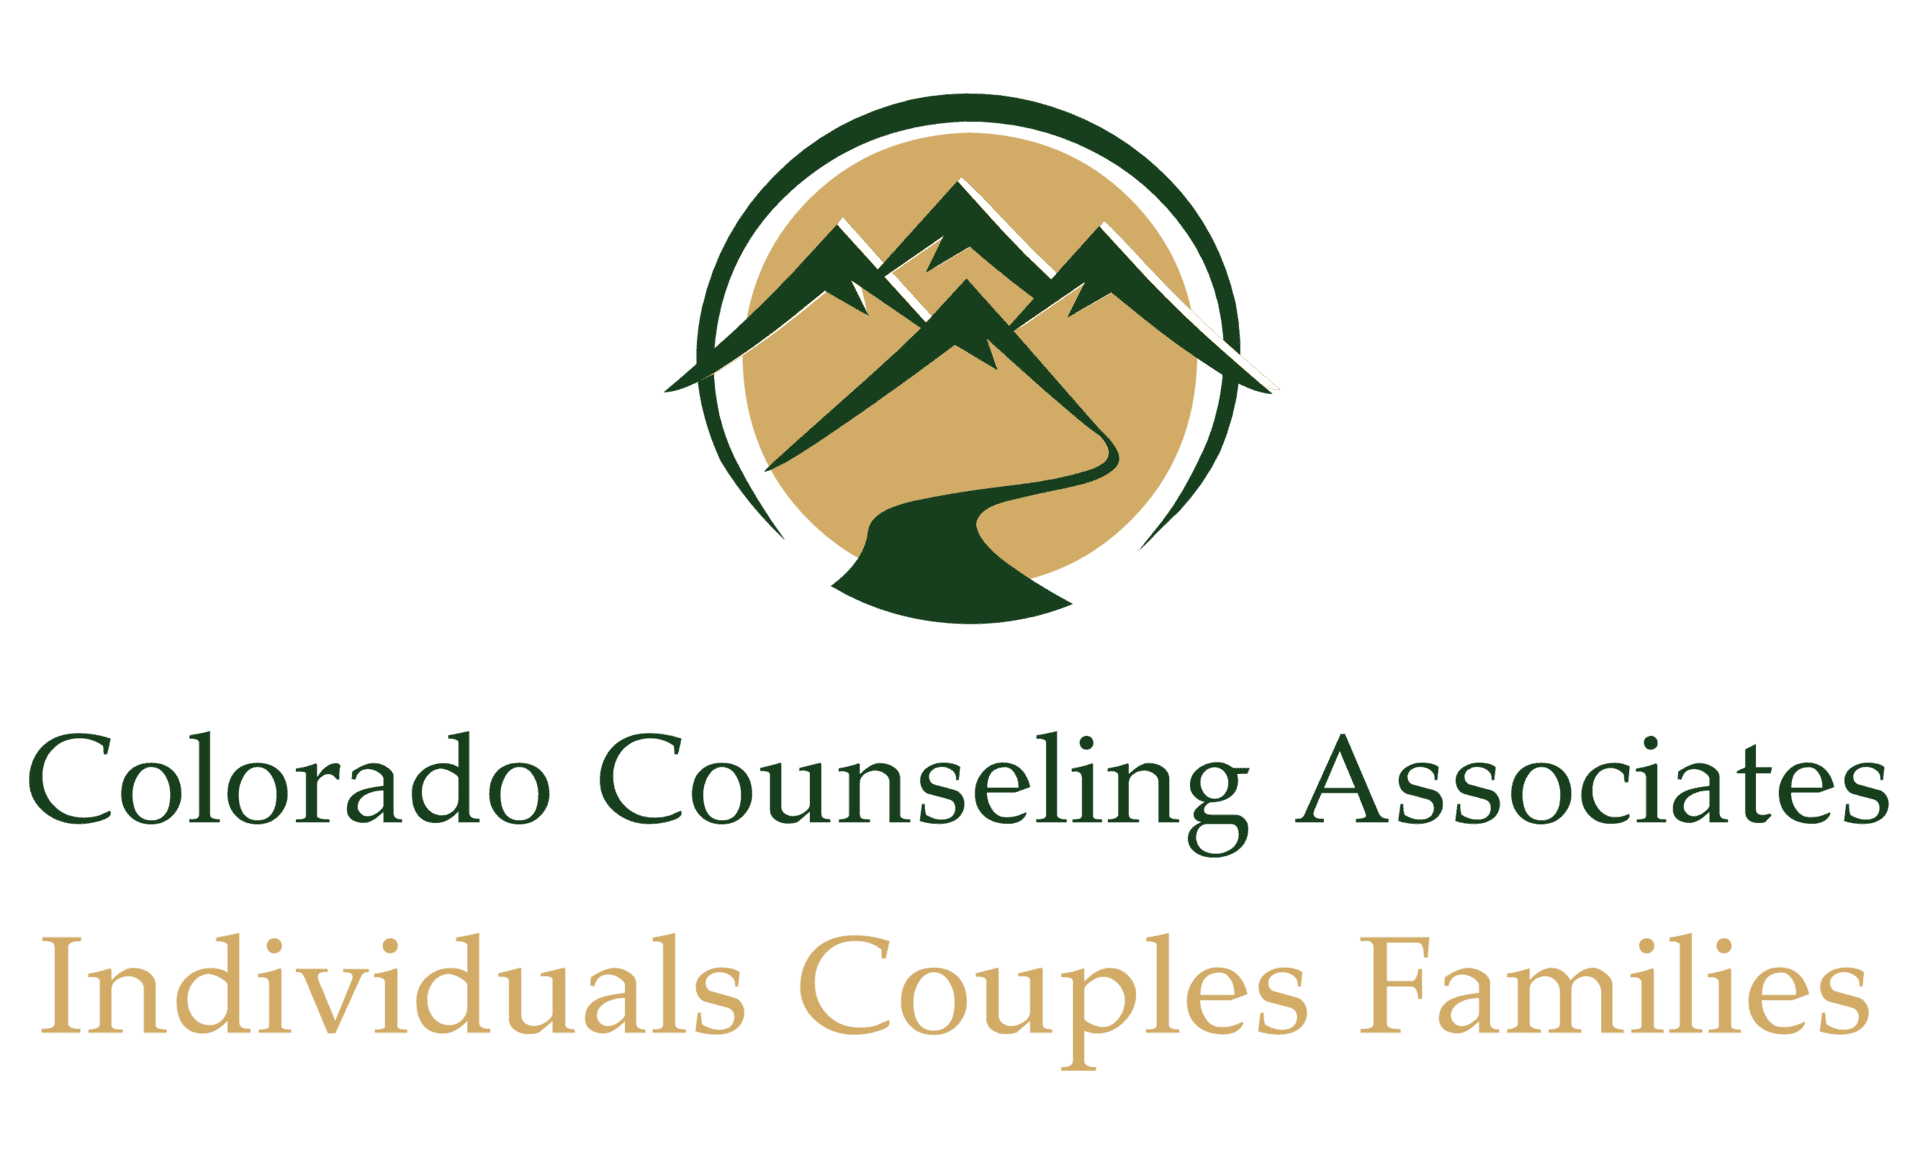 Colorado Counseling Associates Individuals Couples Families